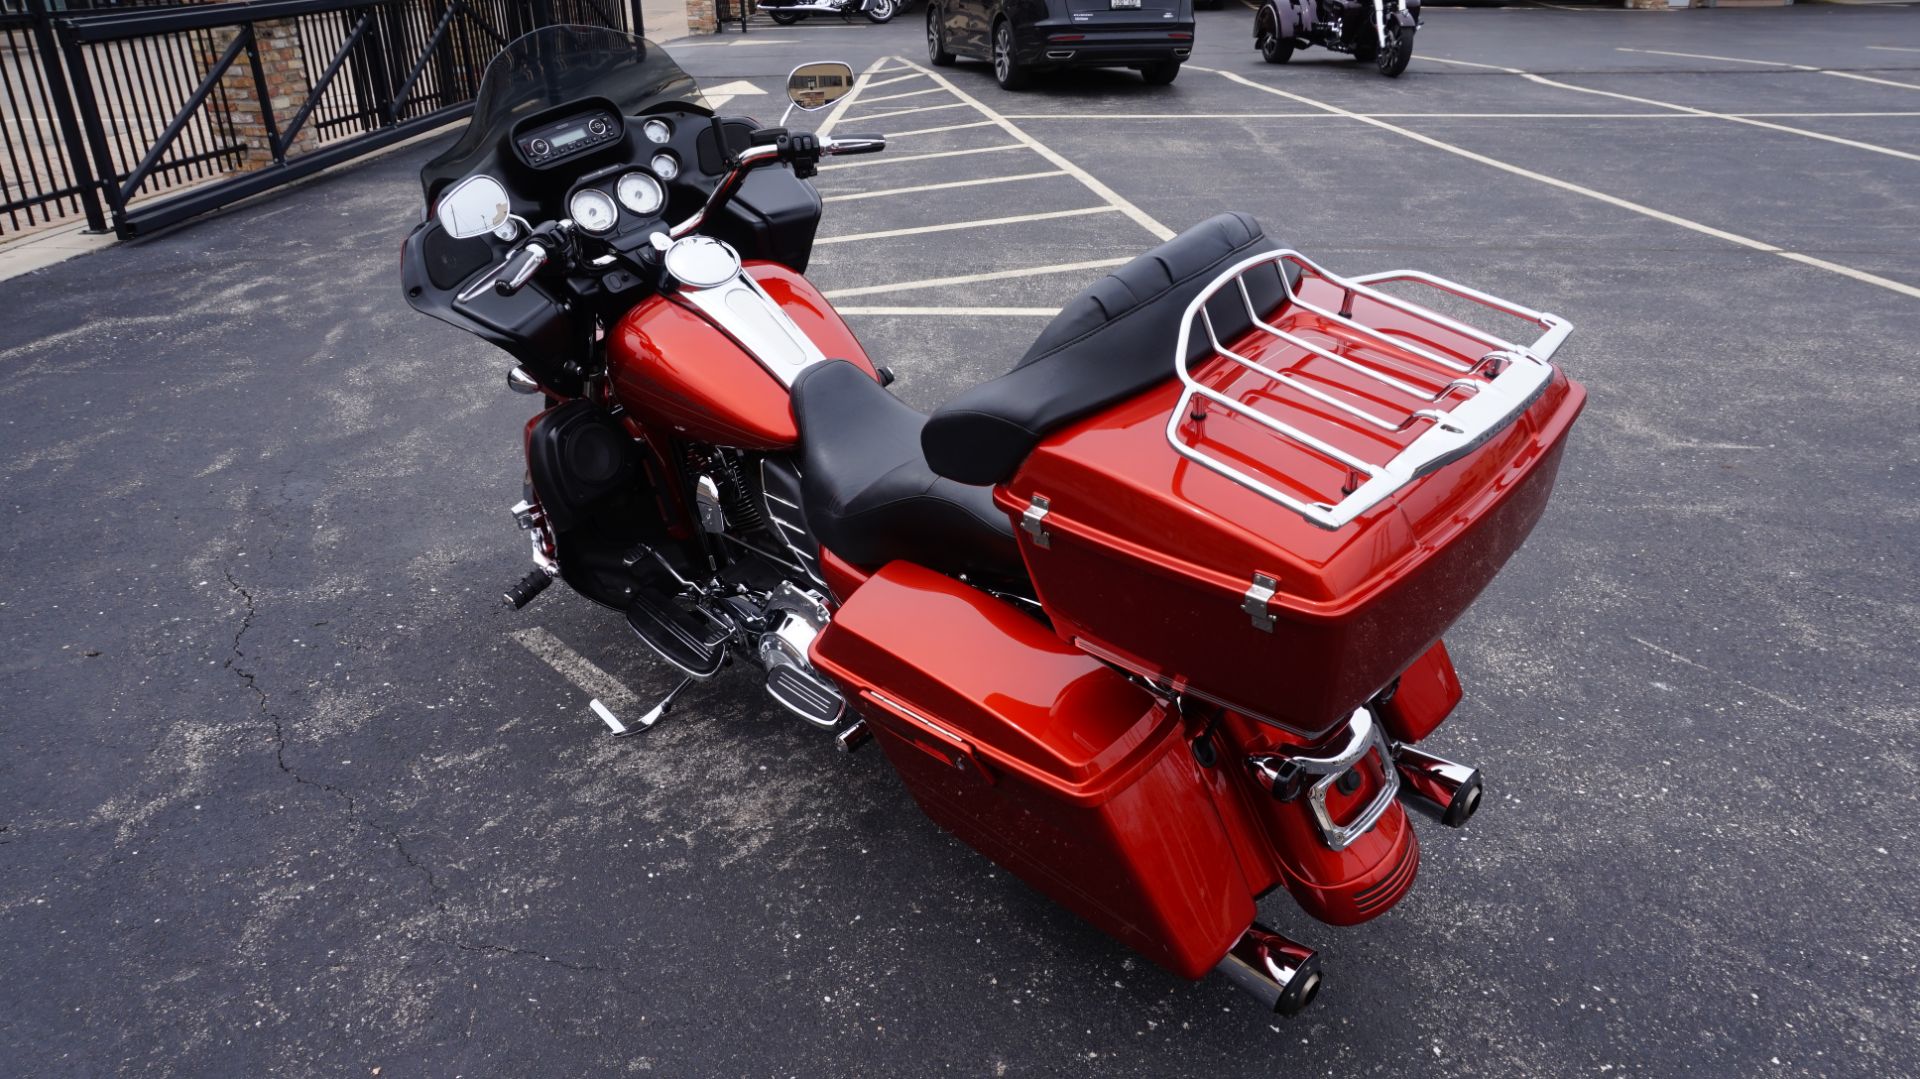 2013 Harley-Davidson Road Glide® Custom in Racine, Wisconsin - Photo 64